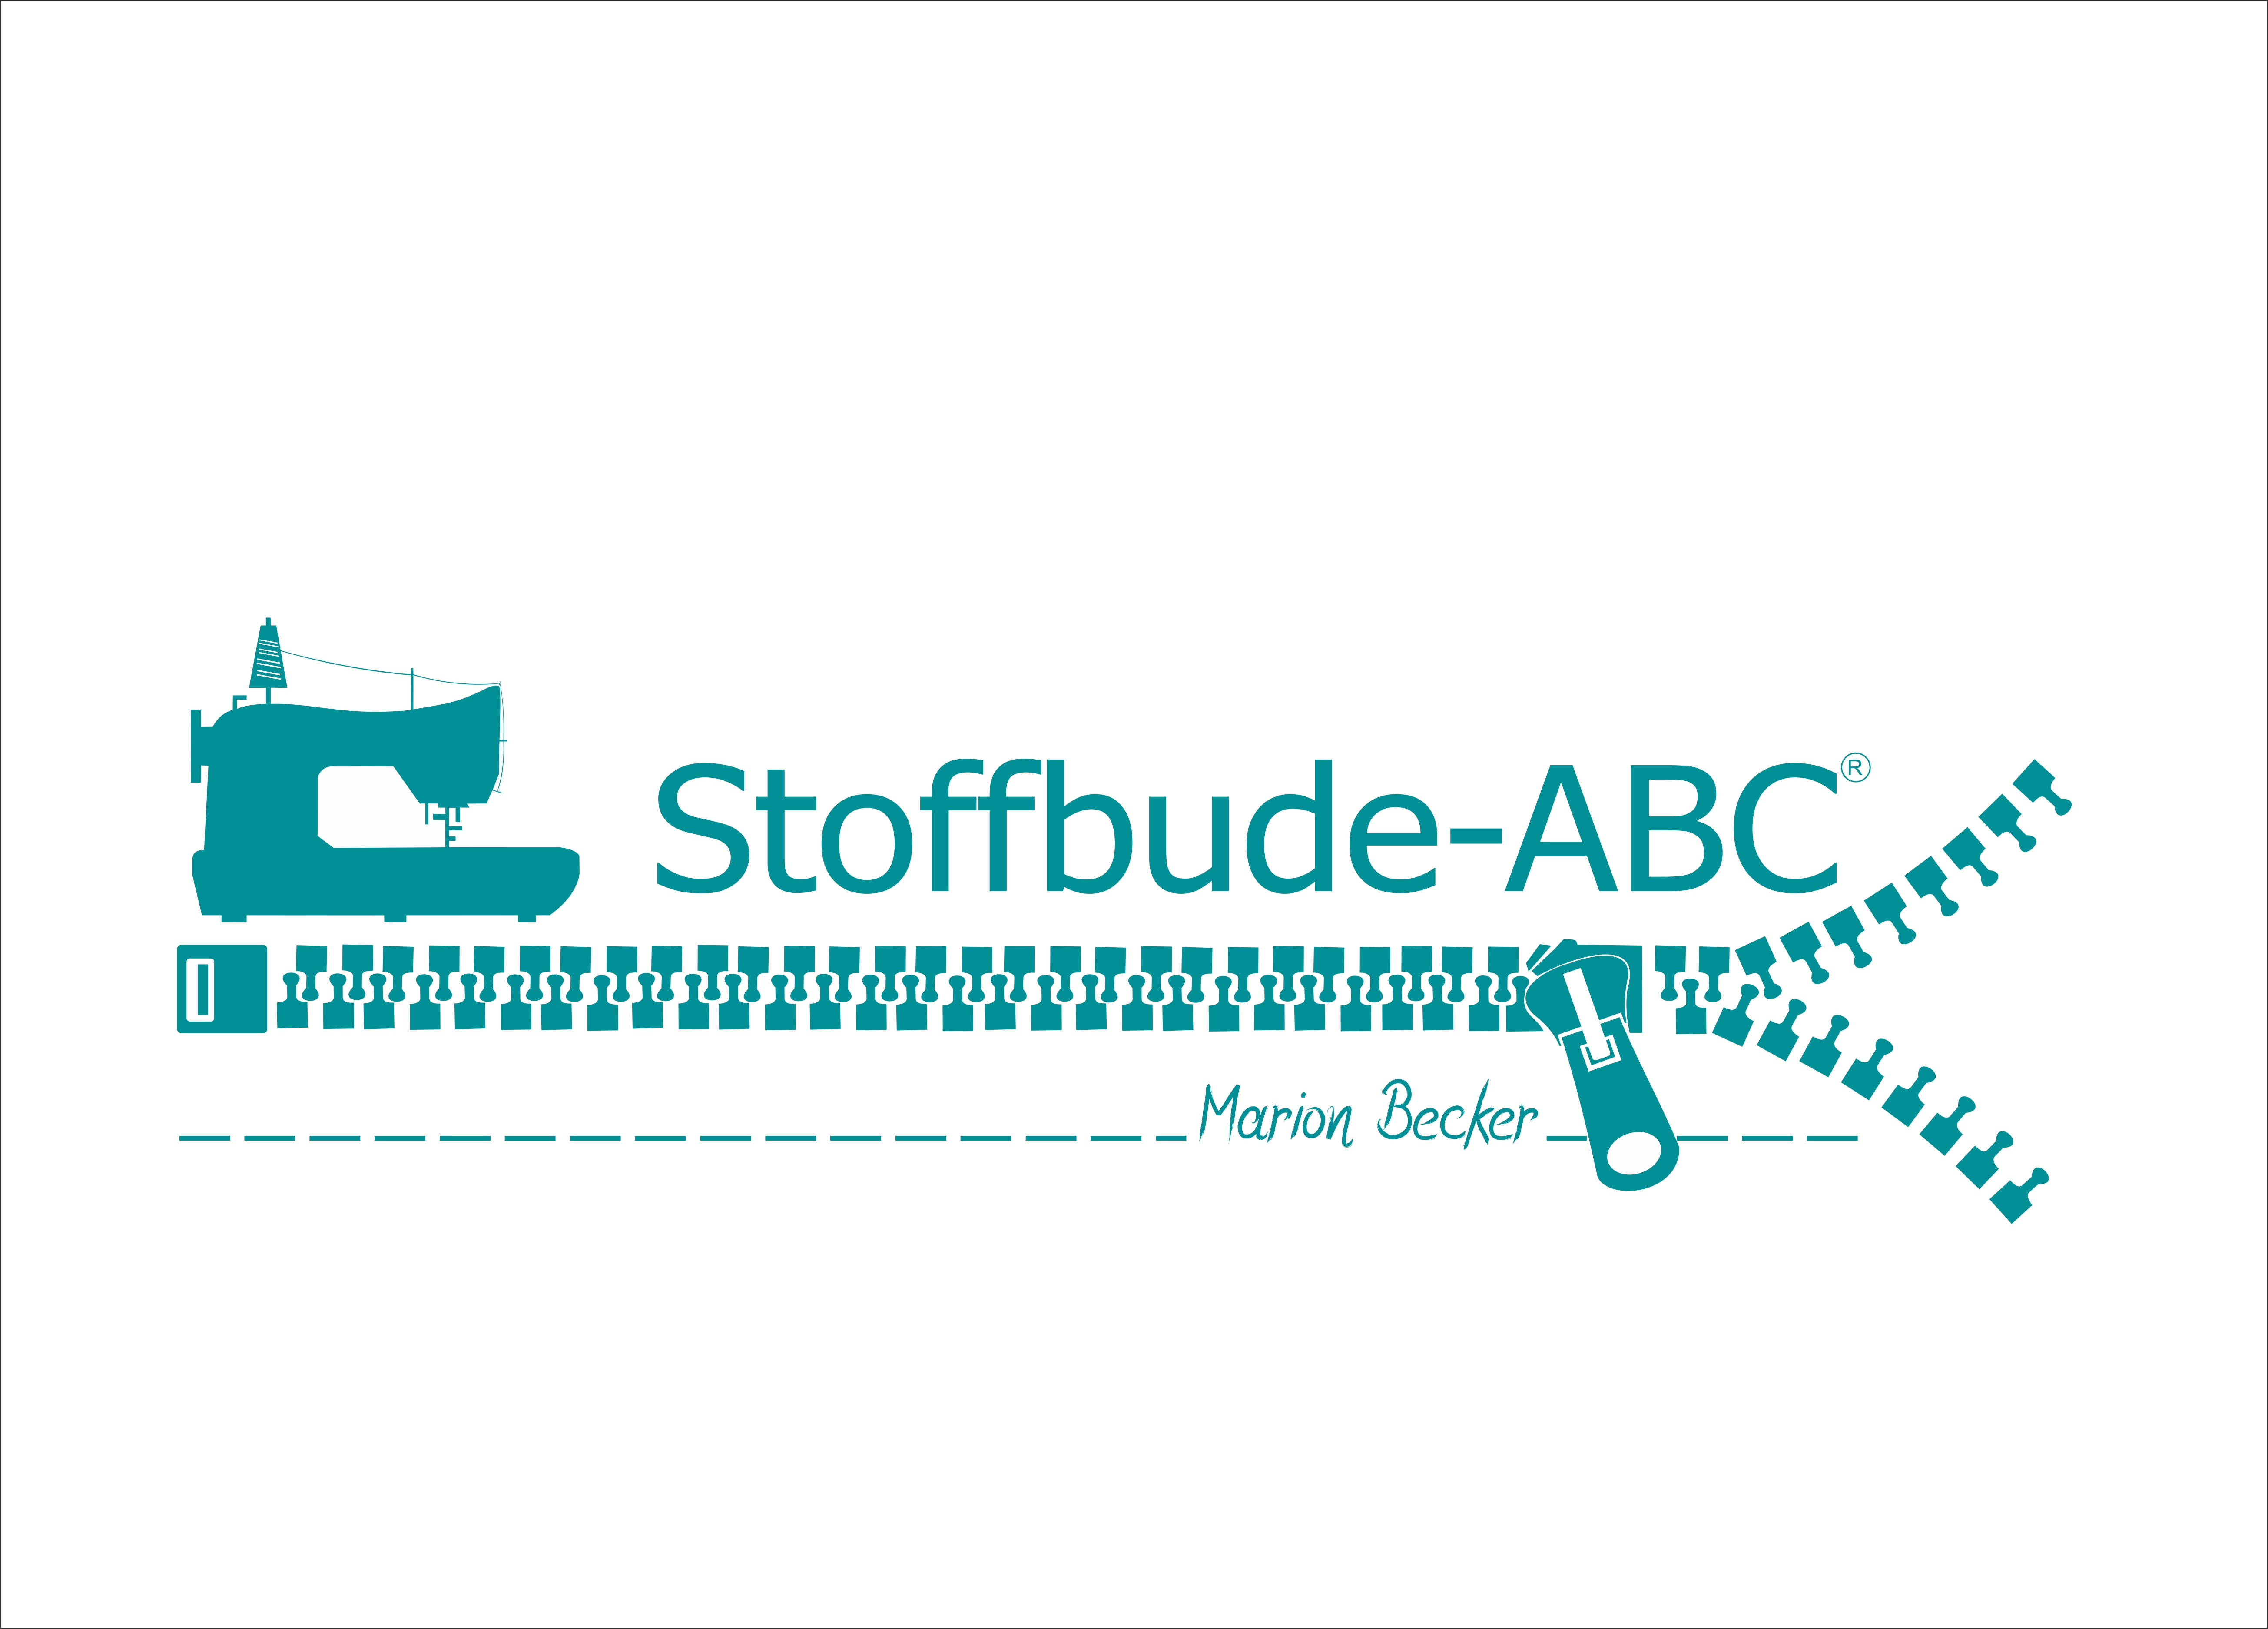 Stoffbude-ABC®